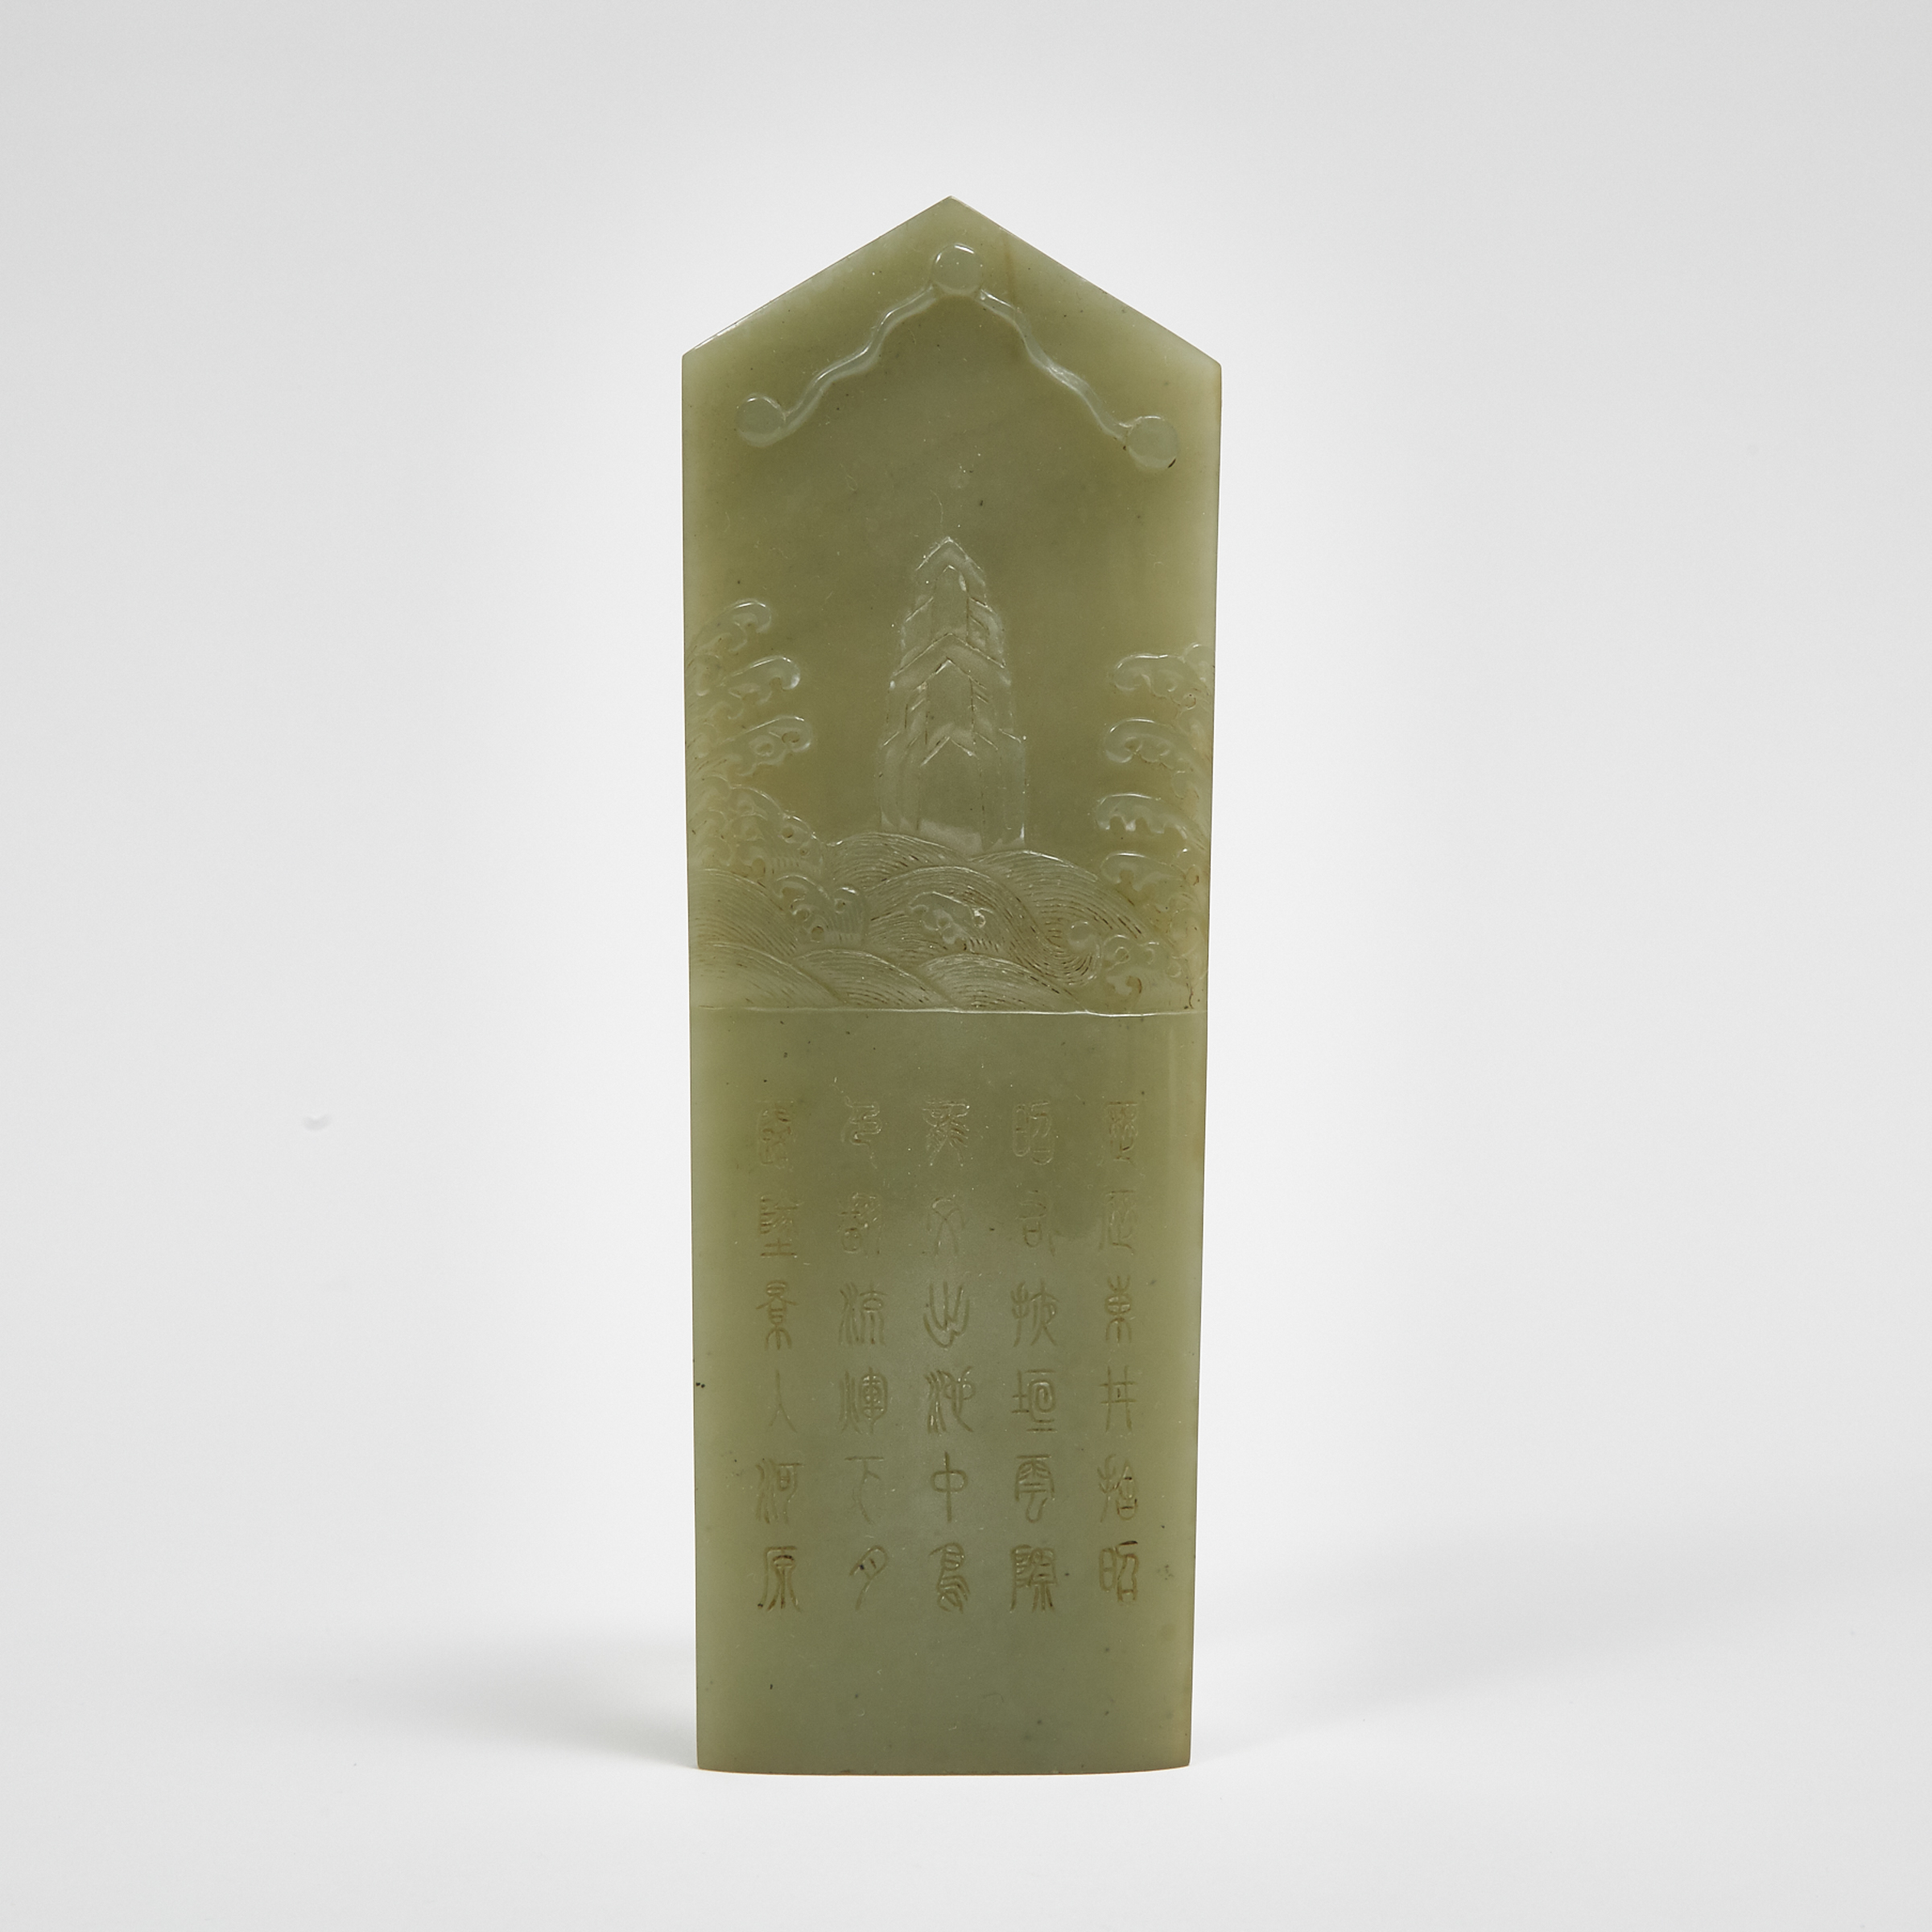 A Celadon Jade Ceremonial 'Gui' Tablet